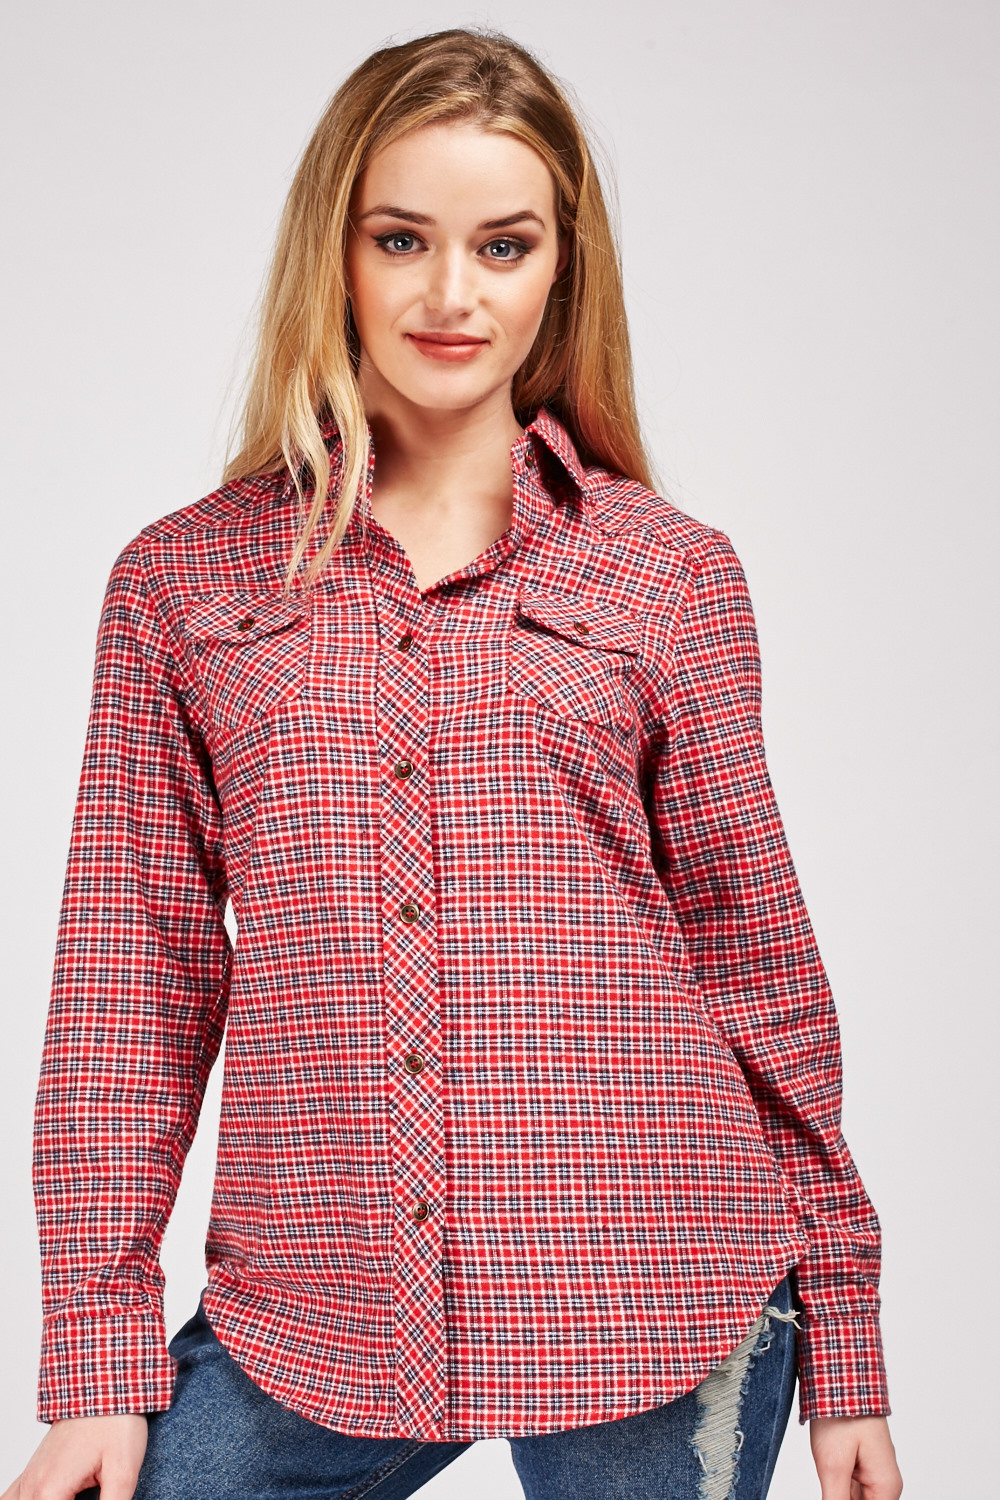 Checkered Casual Shirt - Just $7